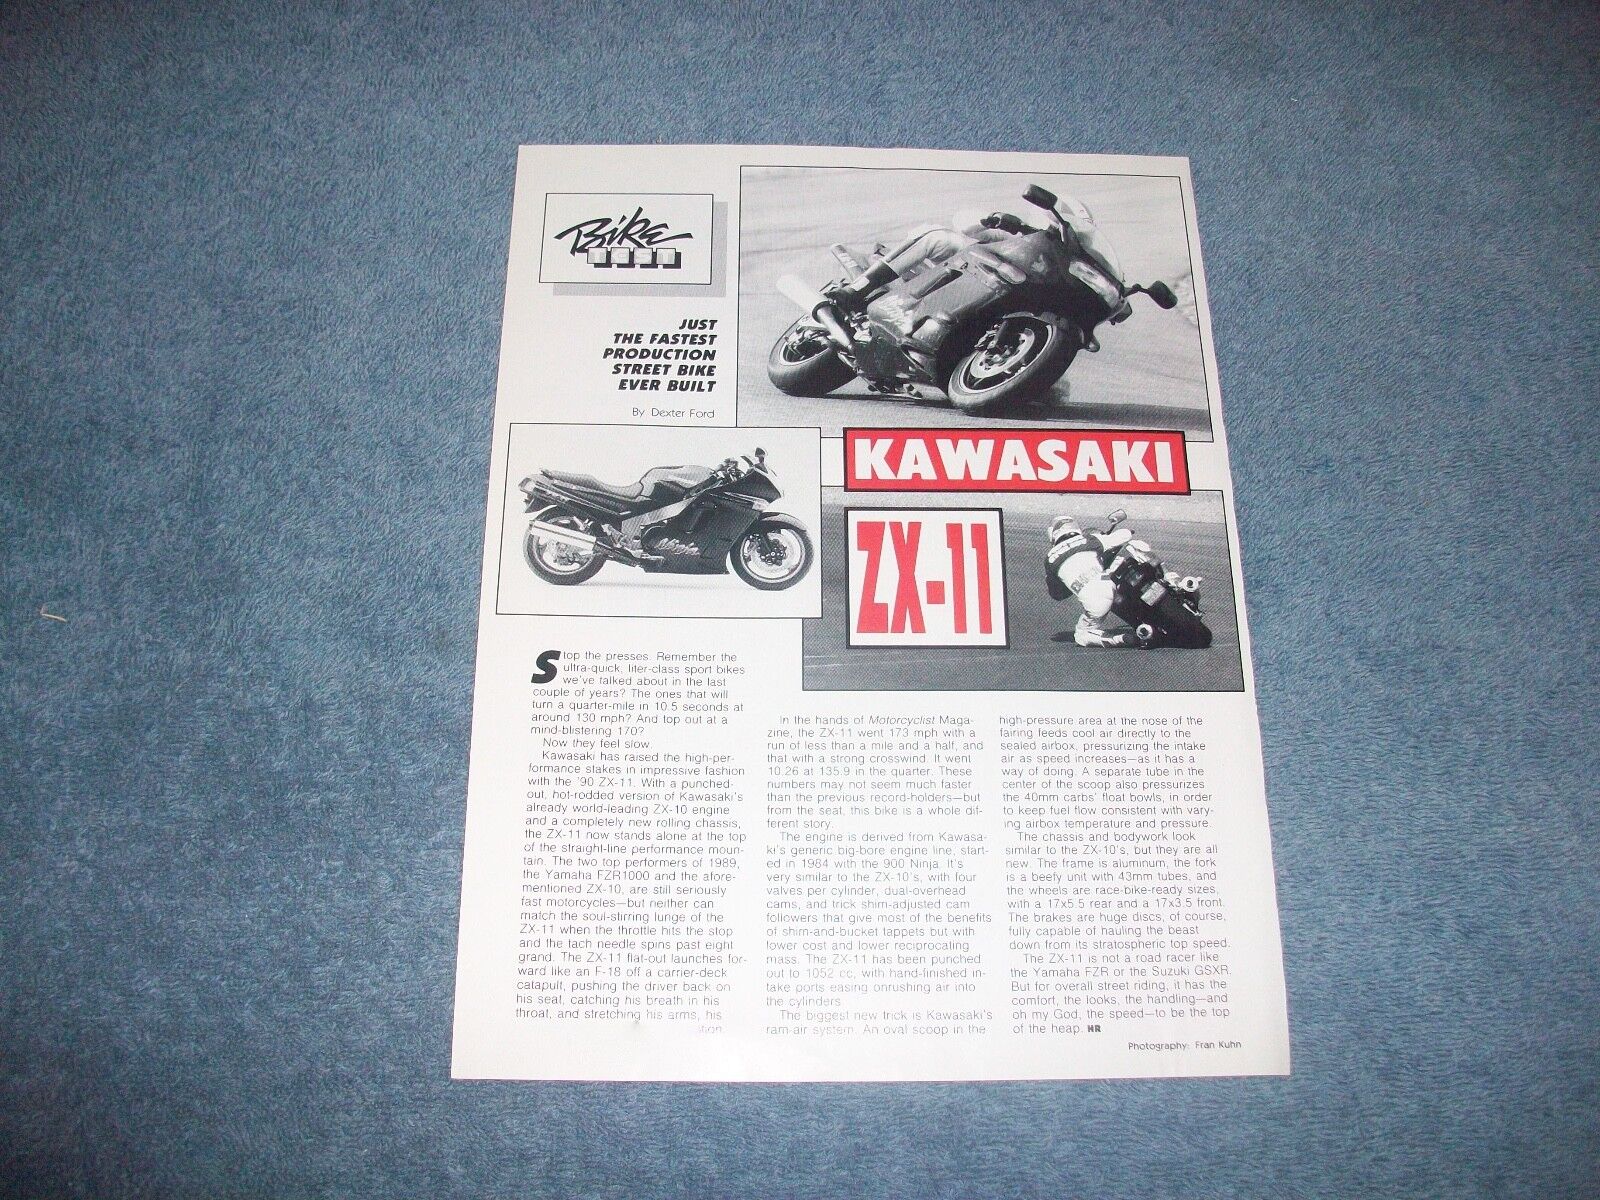 1990 Kawasaki Zx-11 Vintage Street Bike Info Article